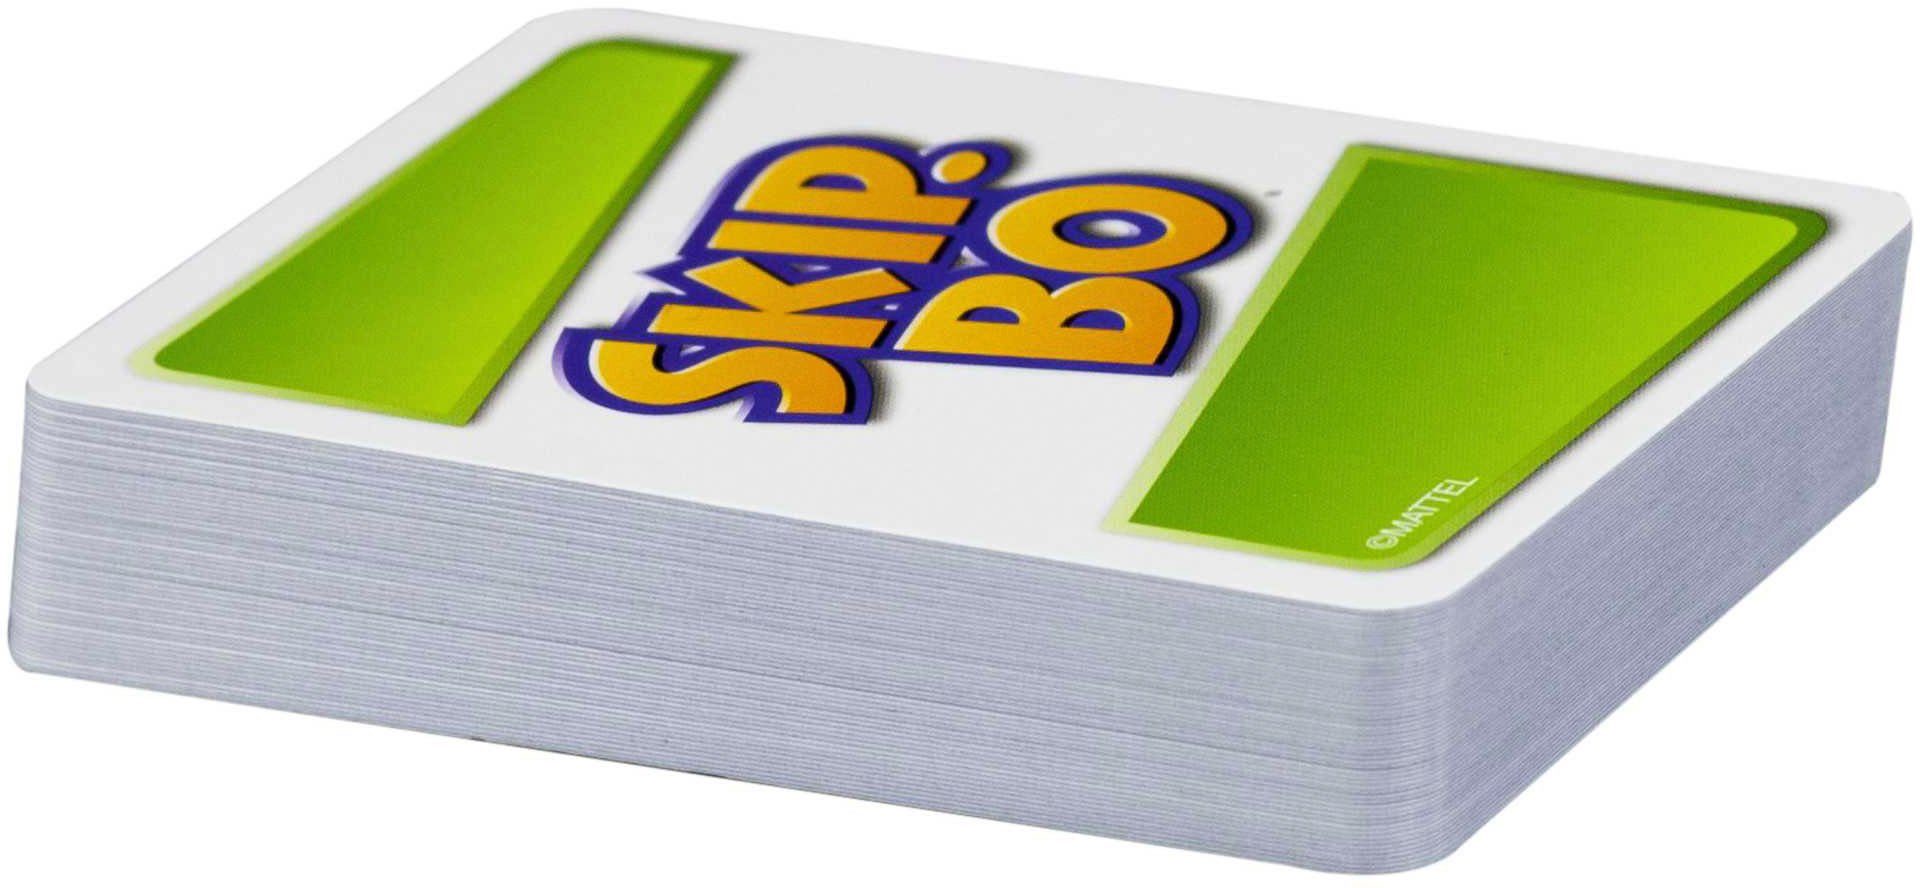 Kartenspiel Spiel, games Skip-Bo Mattel